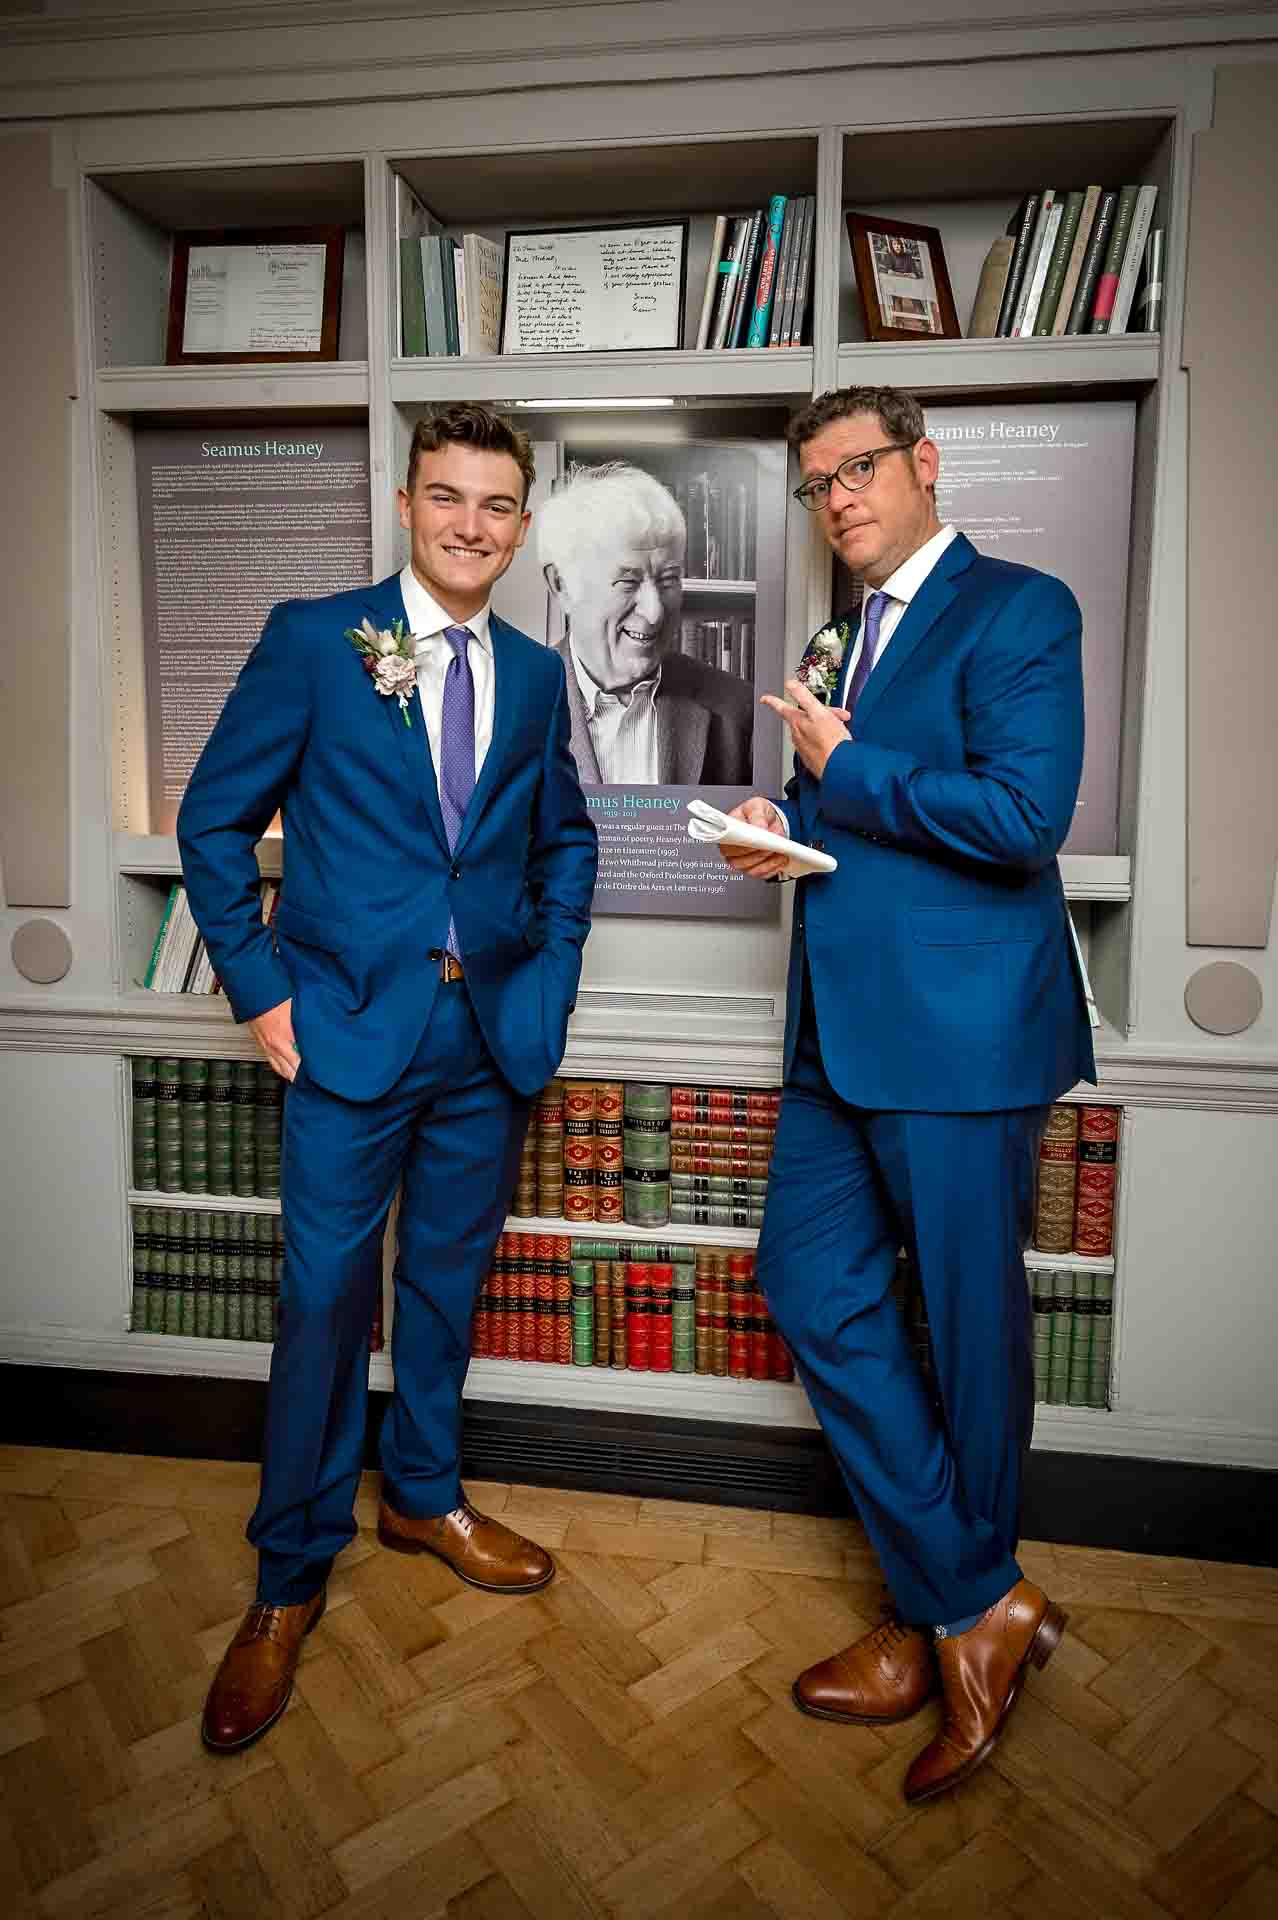 Groom and groomsman standing in front of portrait of Seamus Heaney in the Bloomsbury Hotel